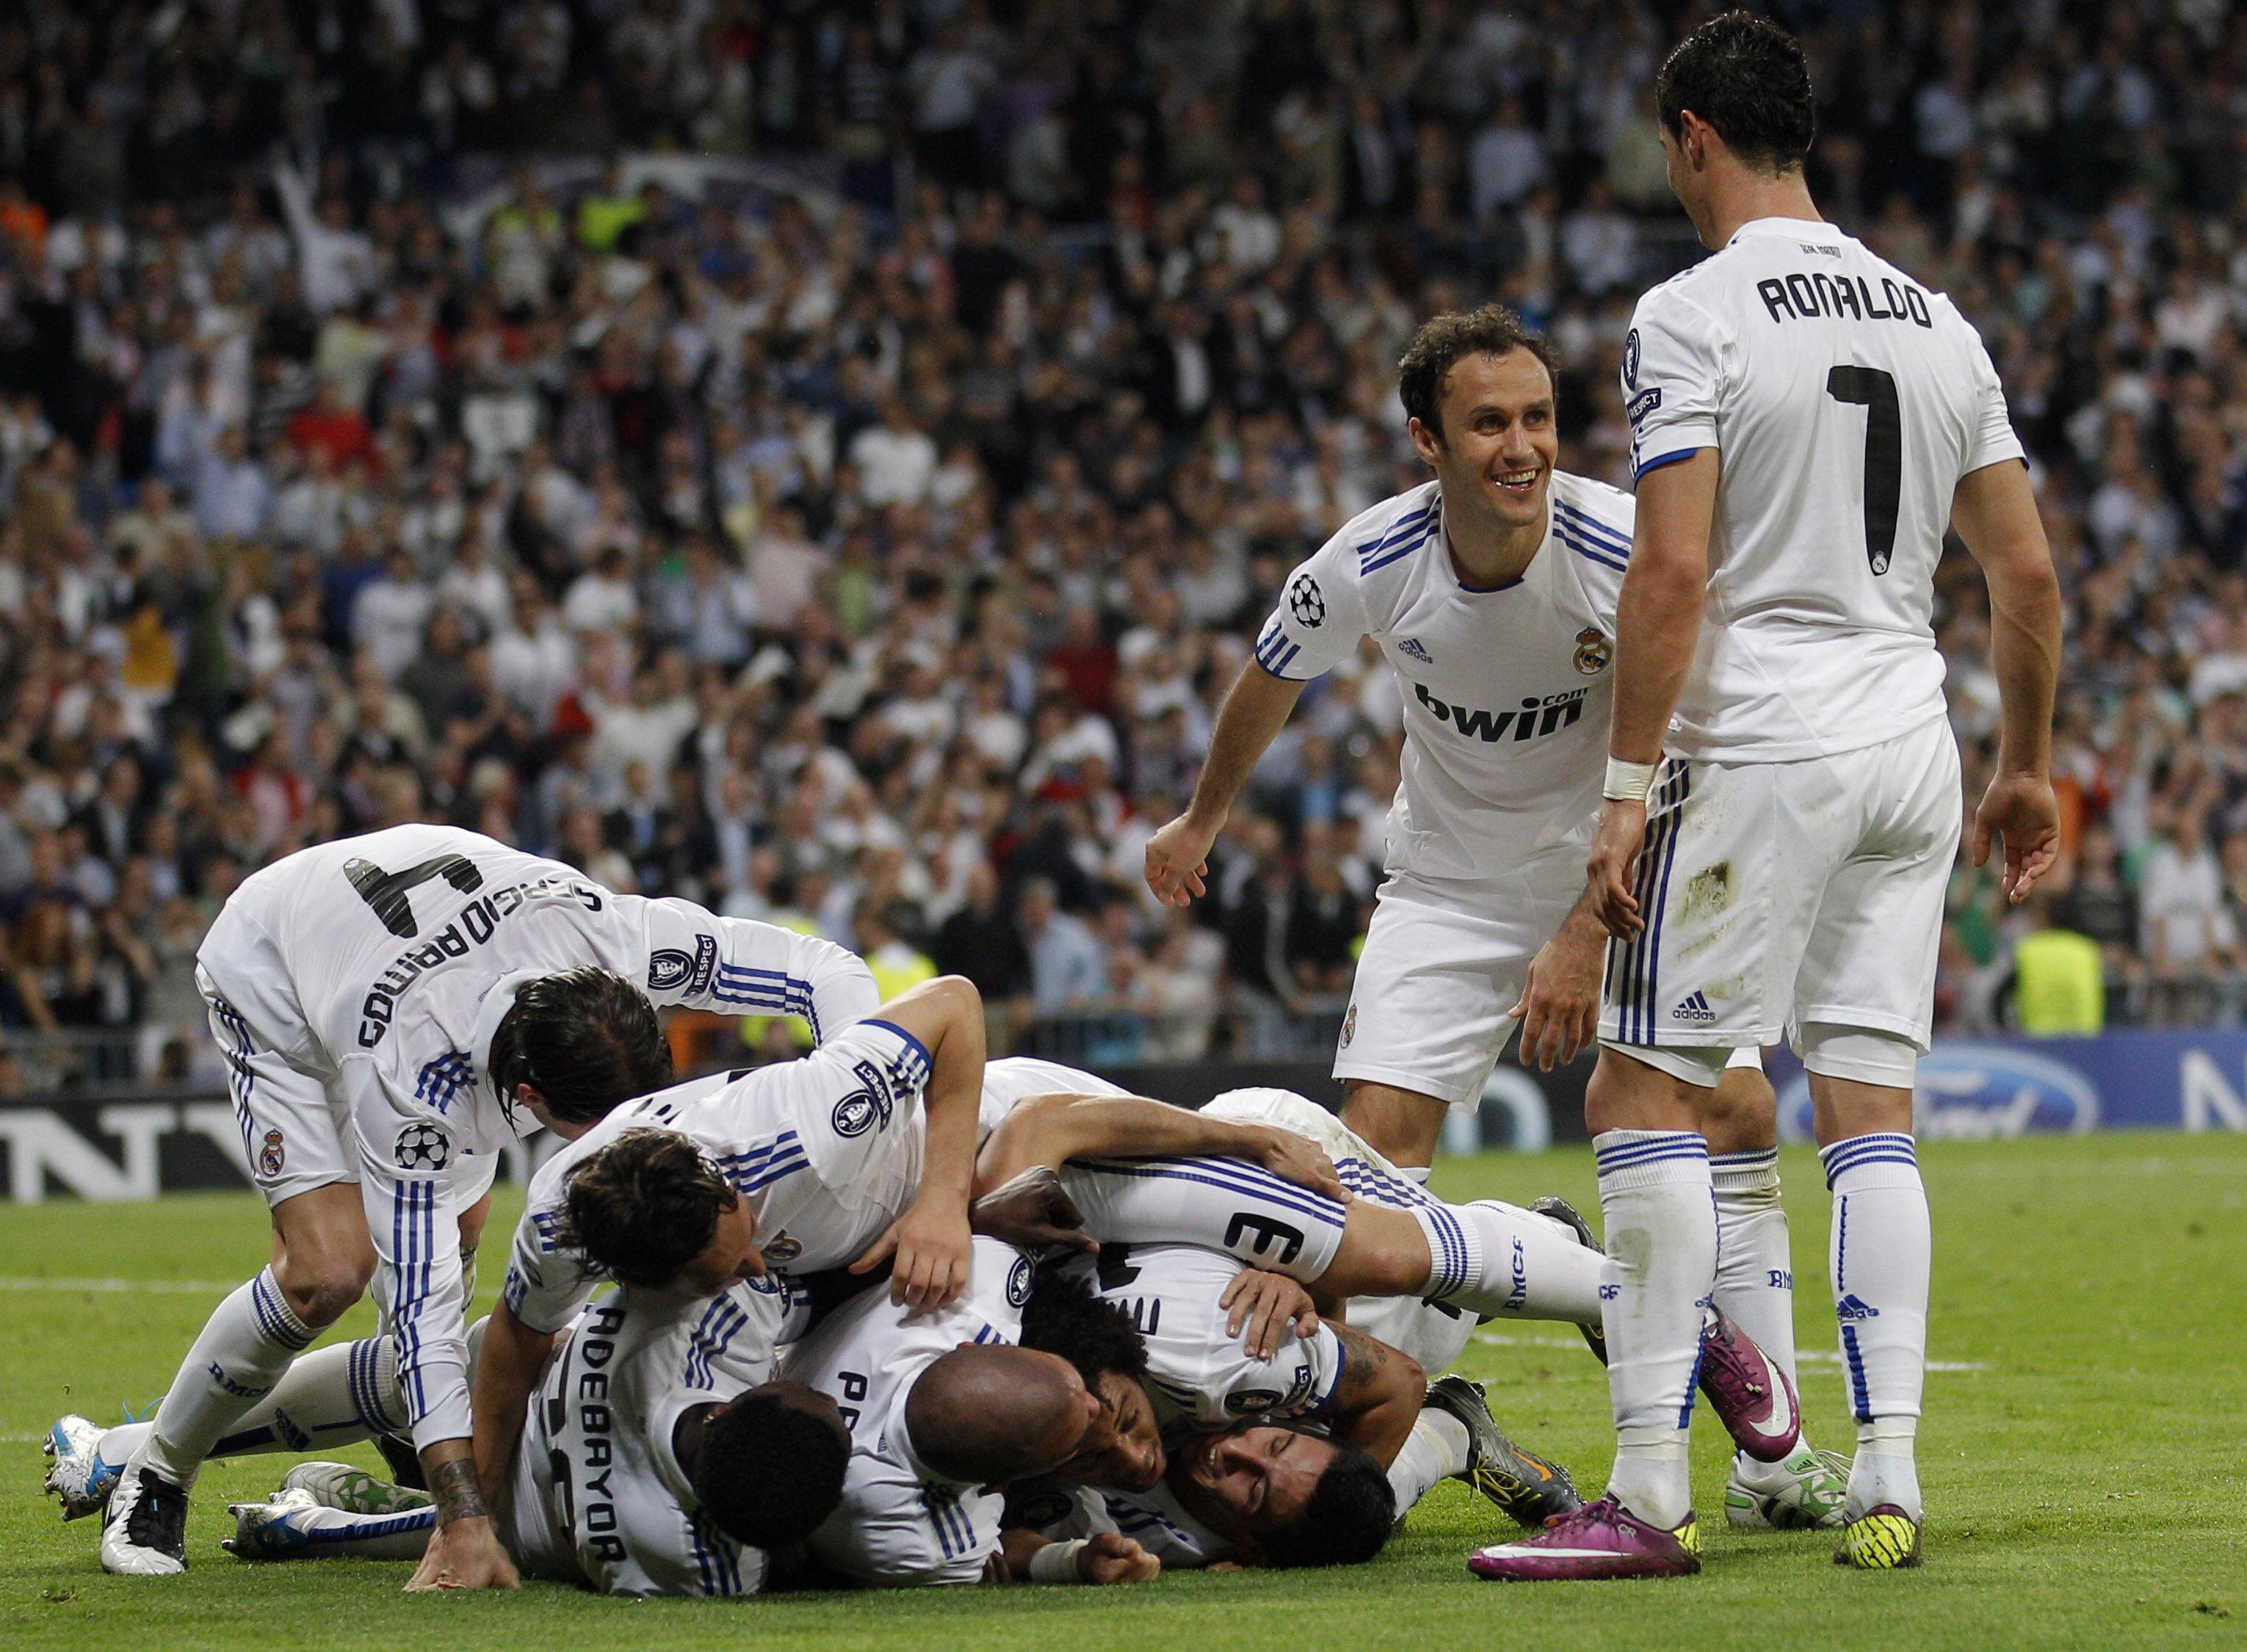 Champions League, Jose Mourinho, Harry Redknapp, Cristiano Ronaldo, Tottenham, Real Madrid, Gareth Bale, Fotboll